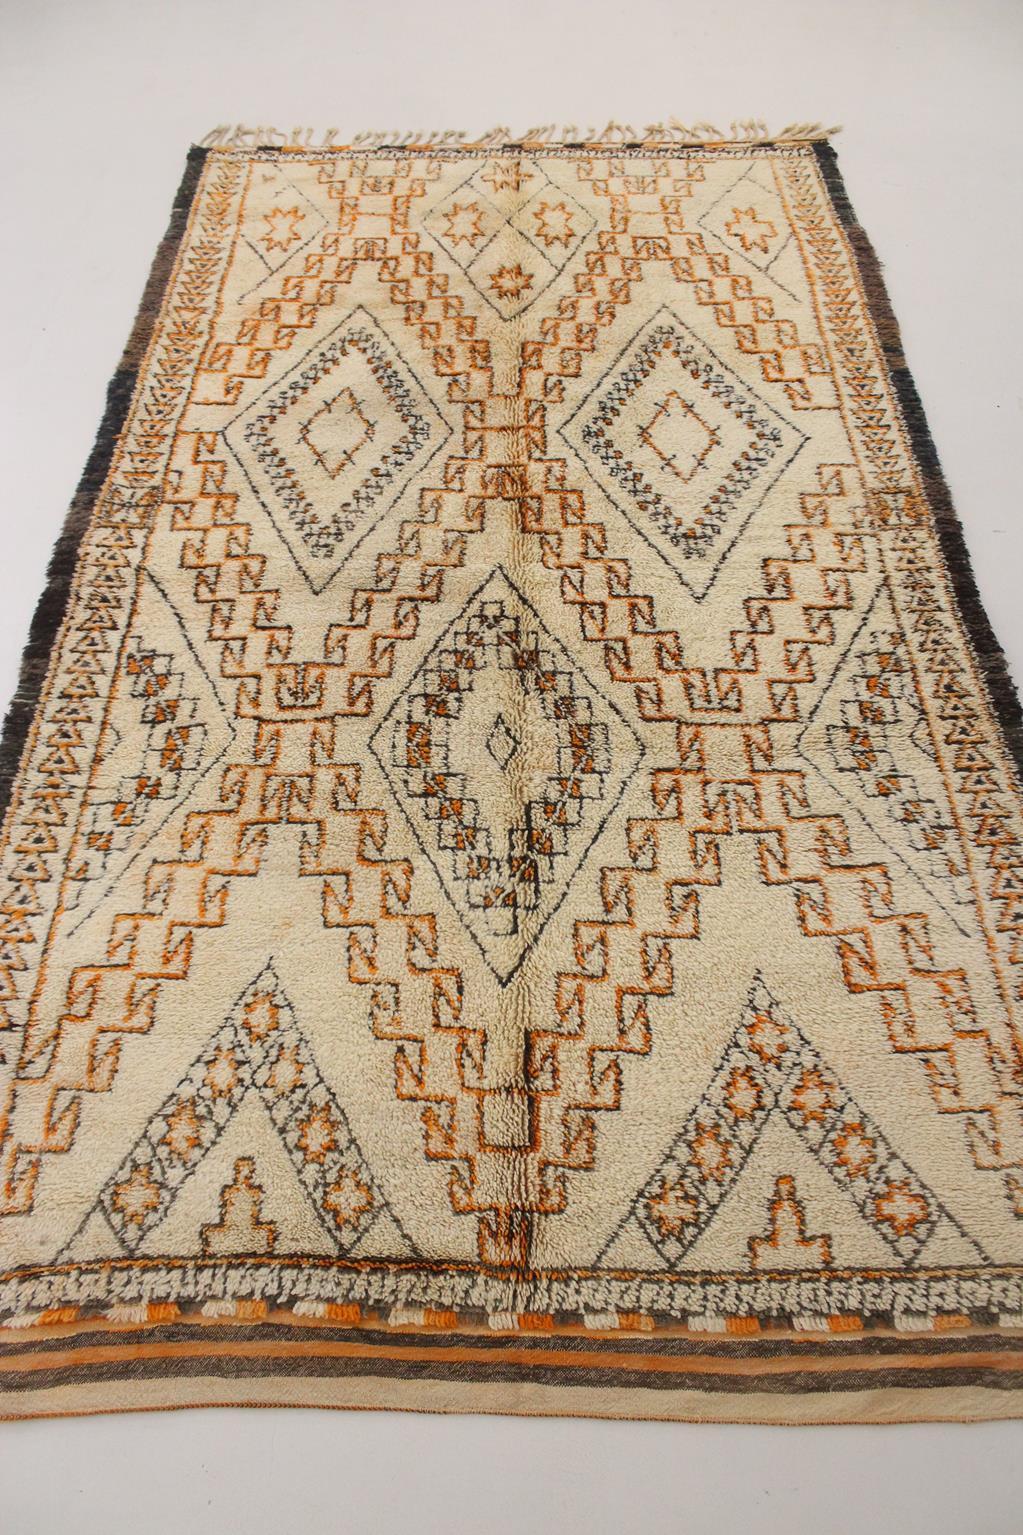 20th Century Vintage Moroccan Beni Ourain rug - Beige/orange - 6.2x11.1feet / 190x340cm For Sale